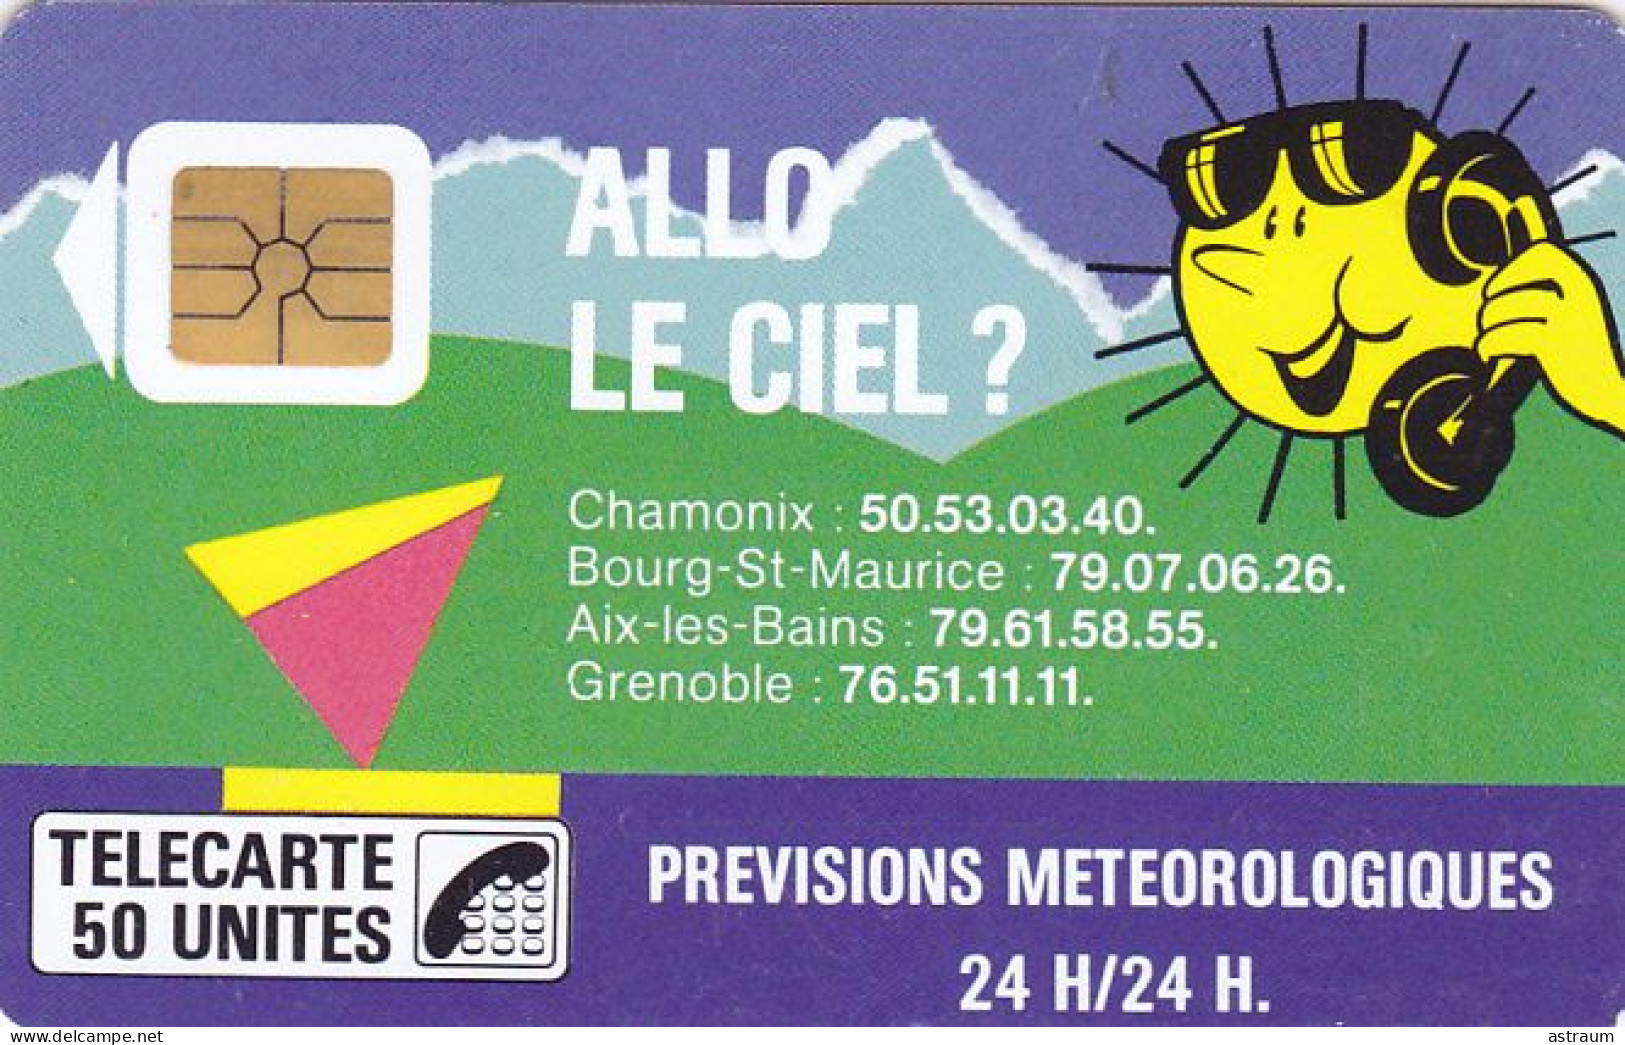 Telecarte Publique F25 LUXE - Allo Le Ciel - So2 - 58000 Ex - 50 Un - 1988 - 1988